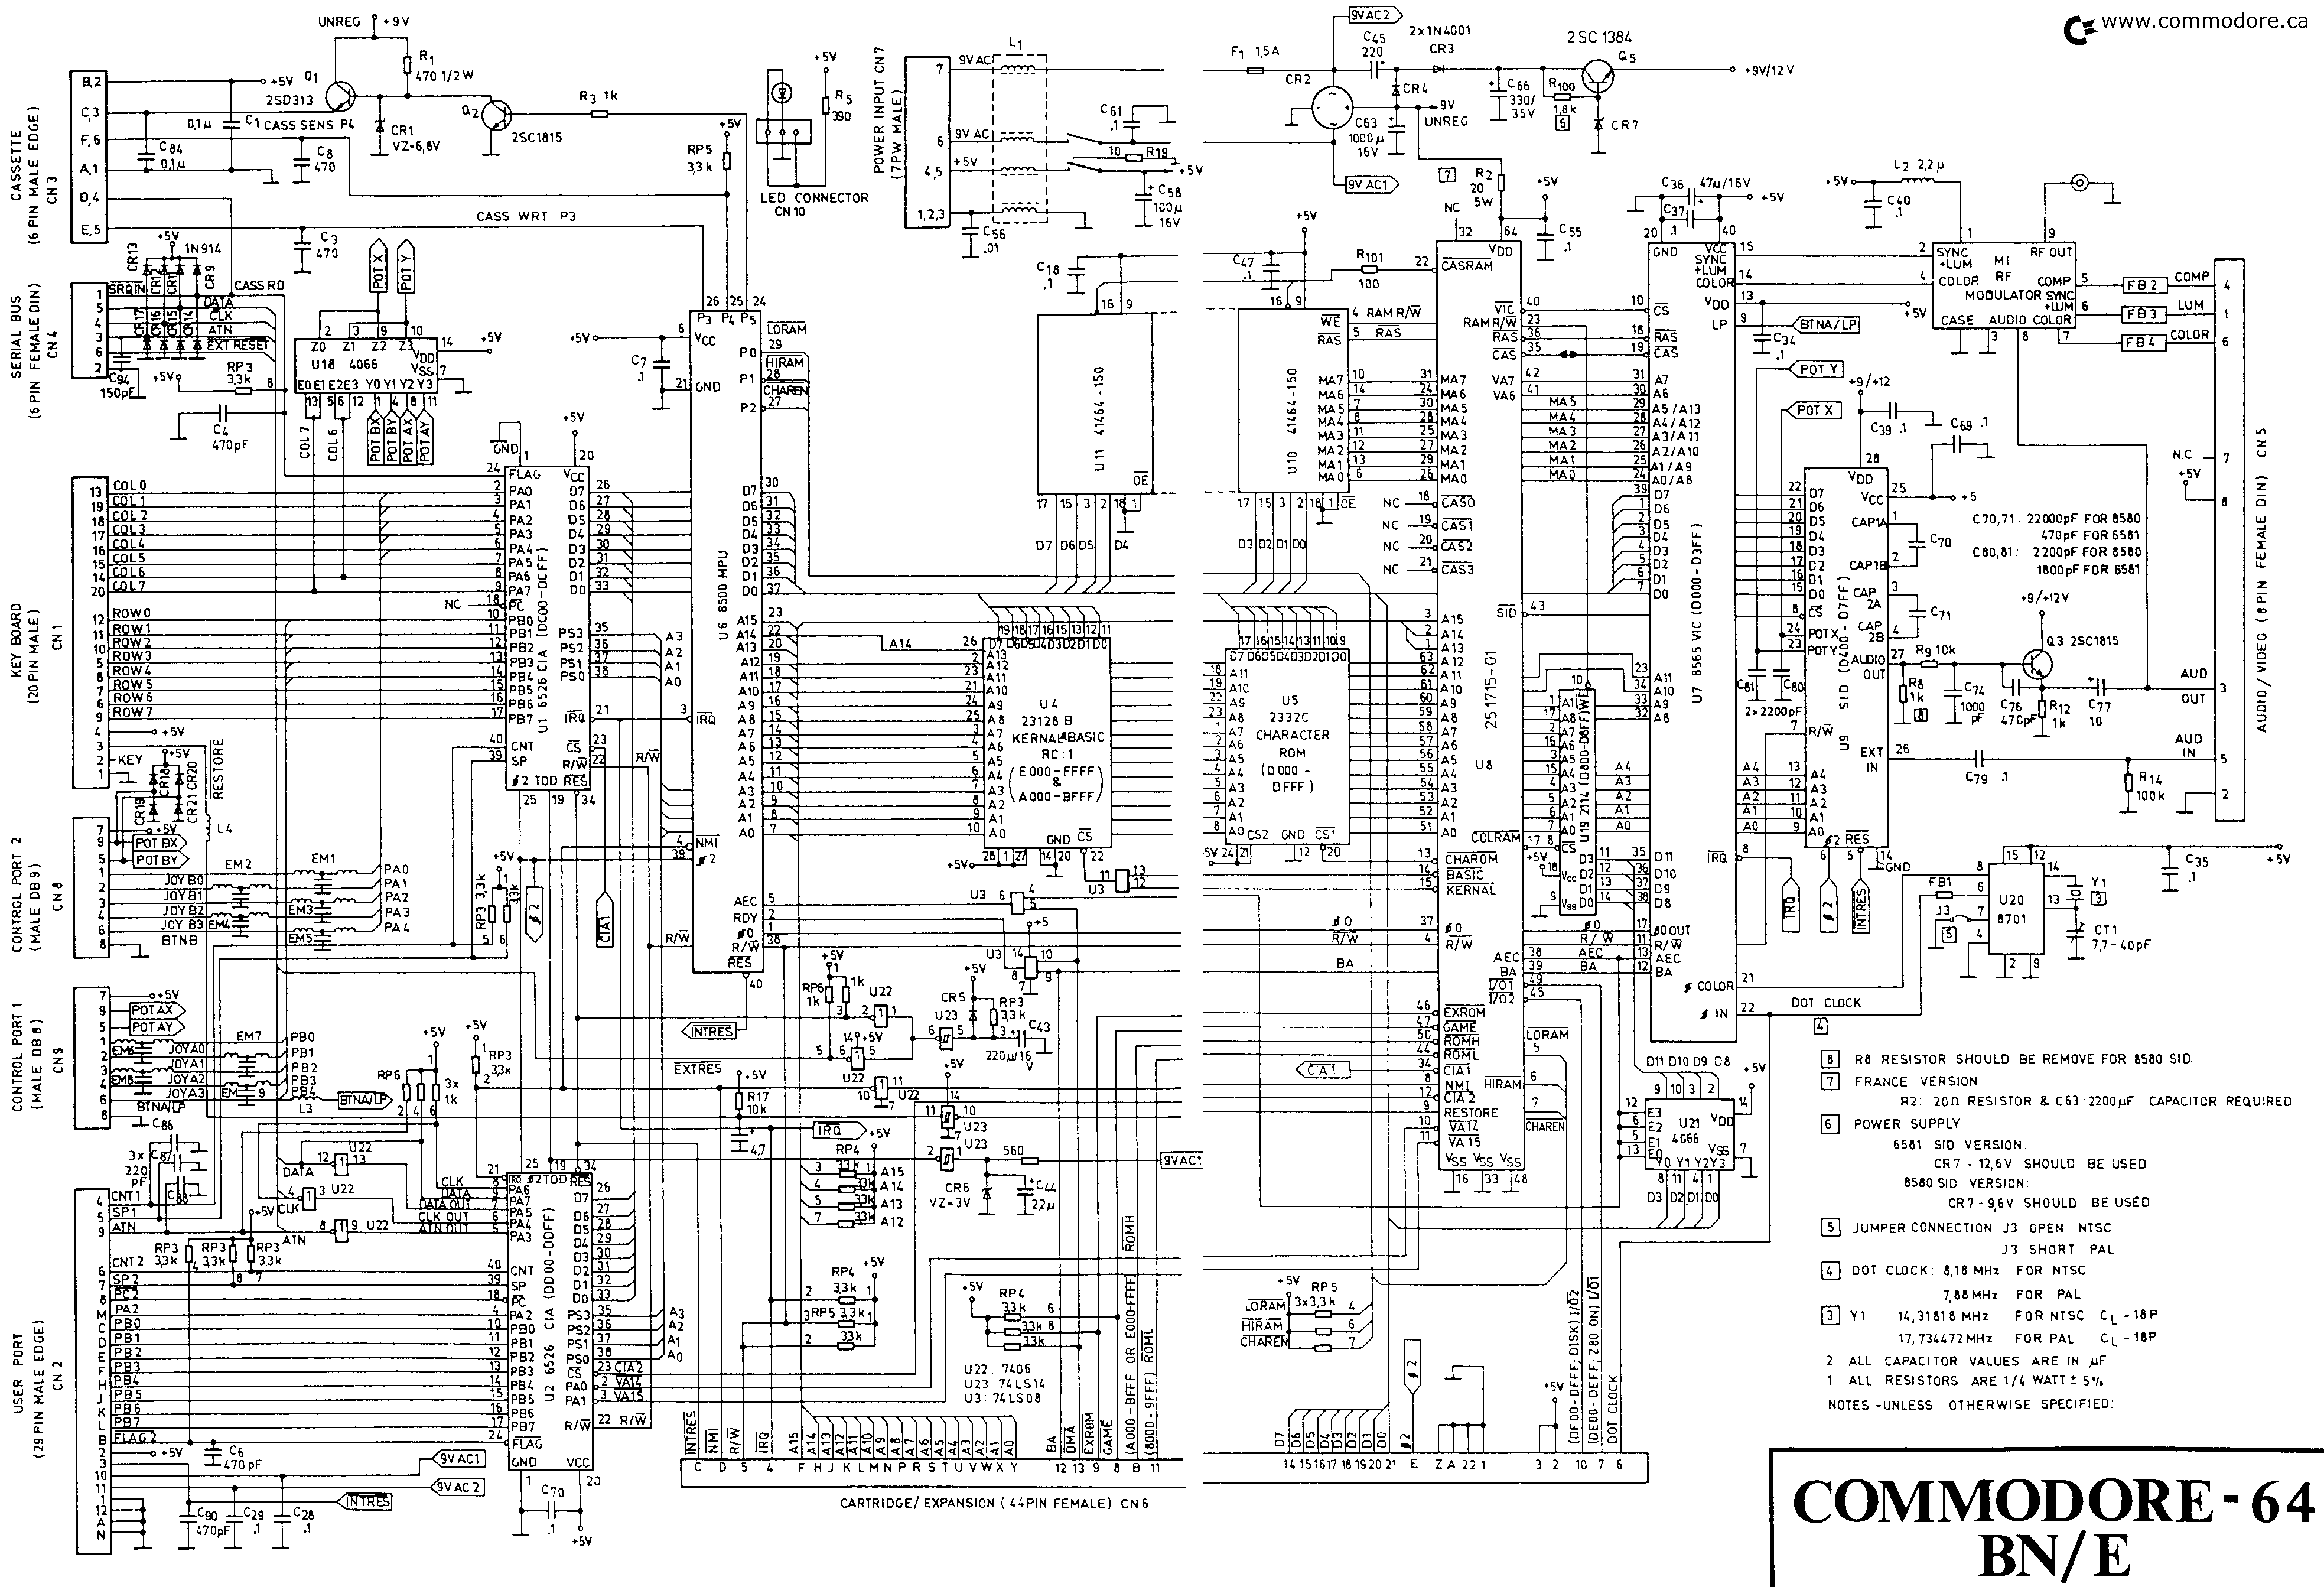 pxmalion corei3 wiring diagram